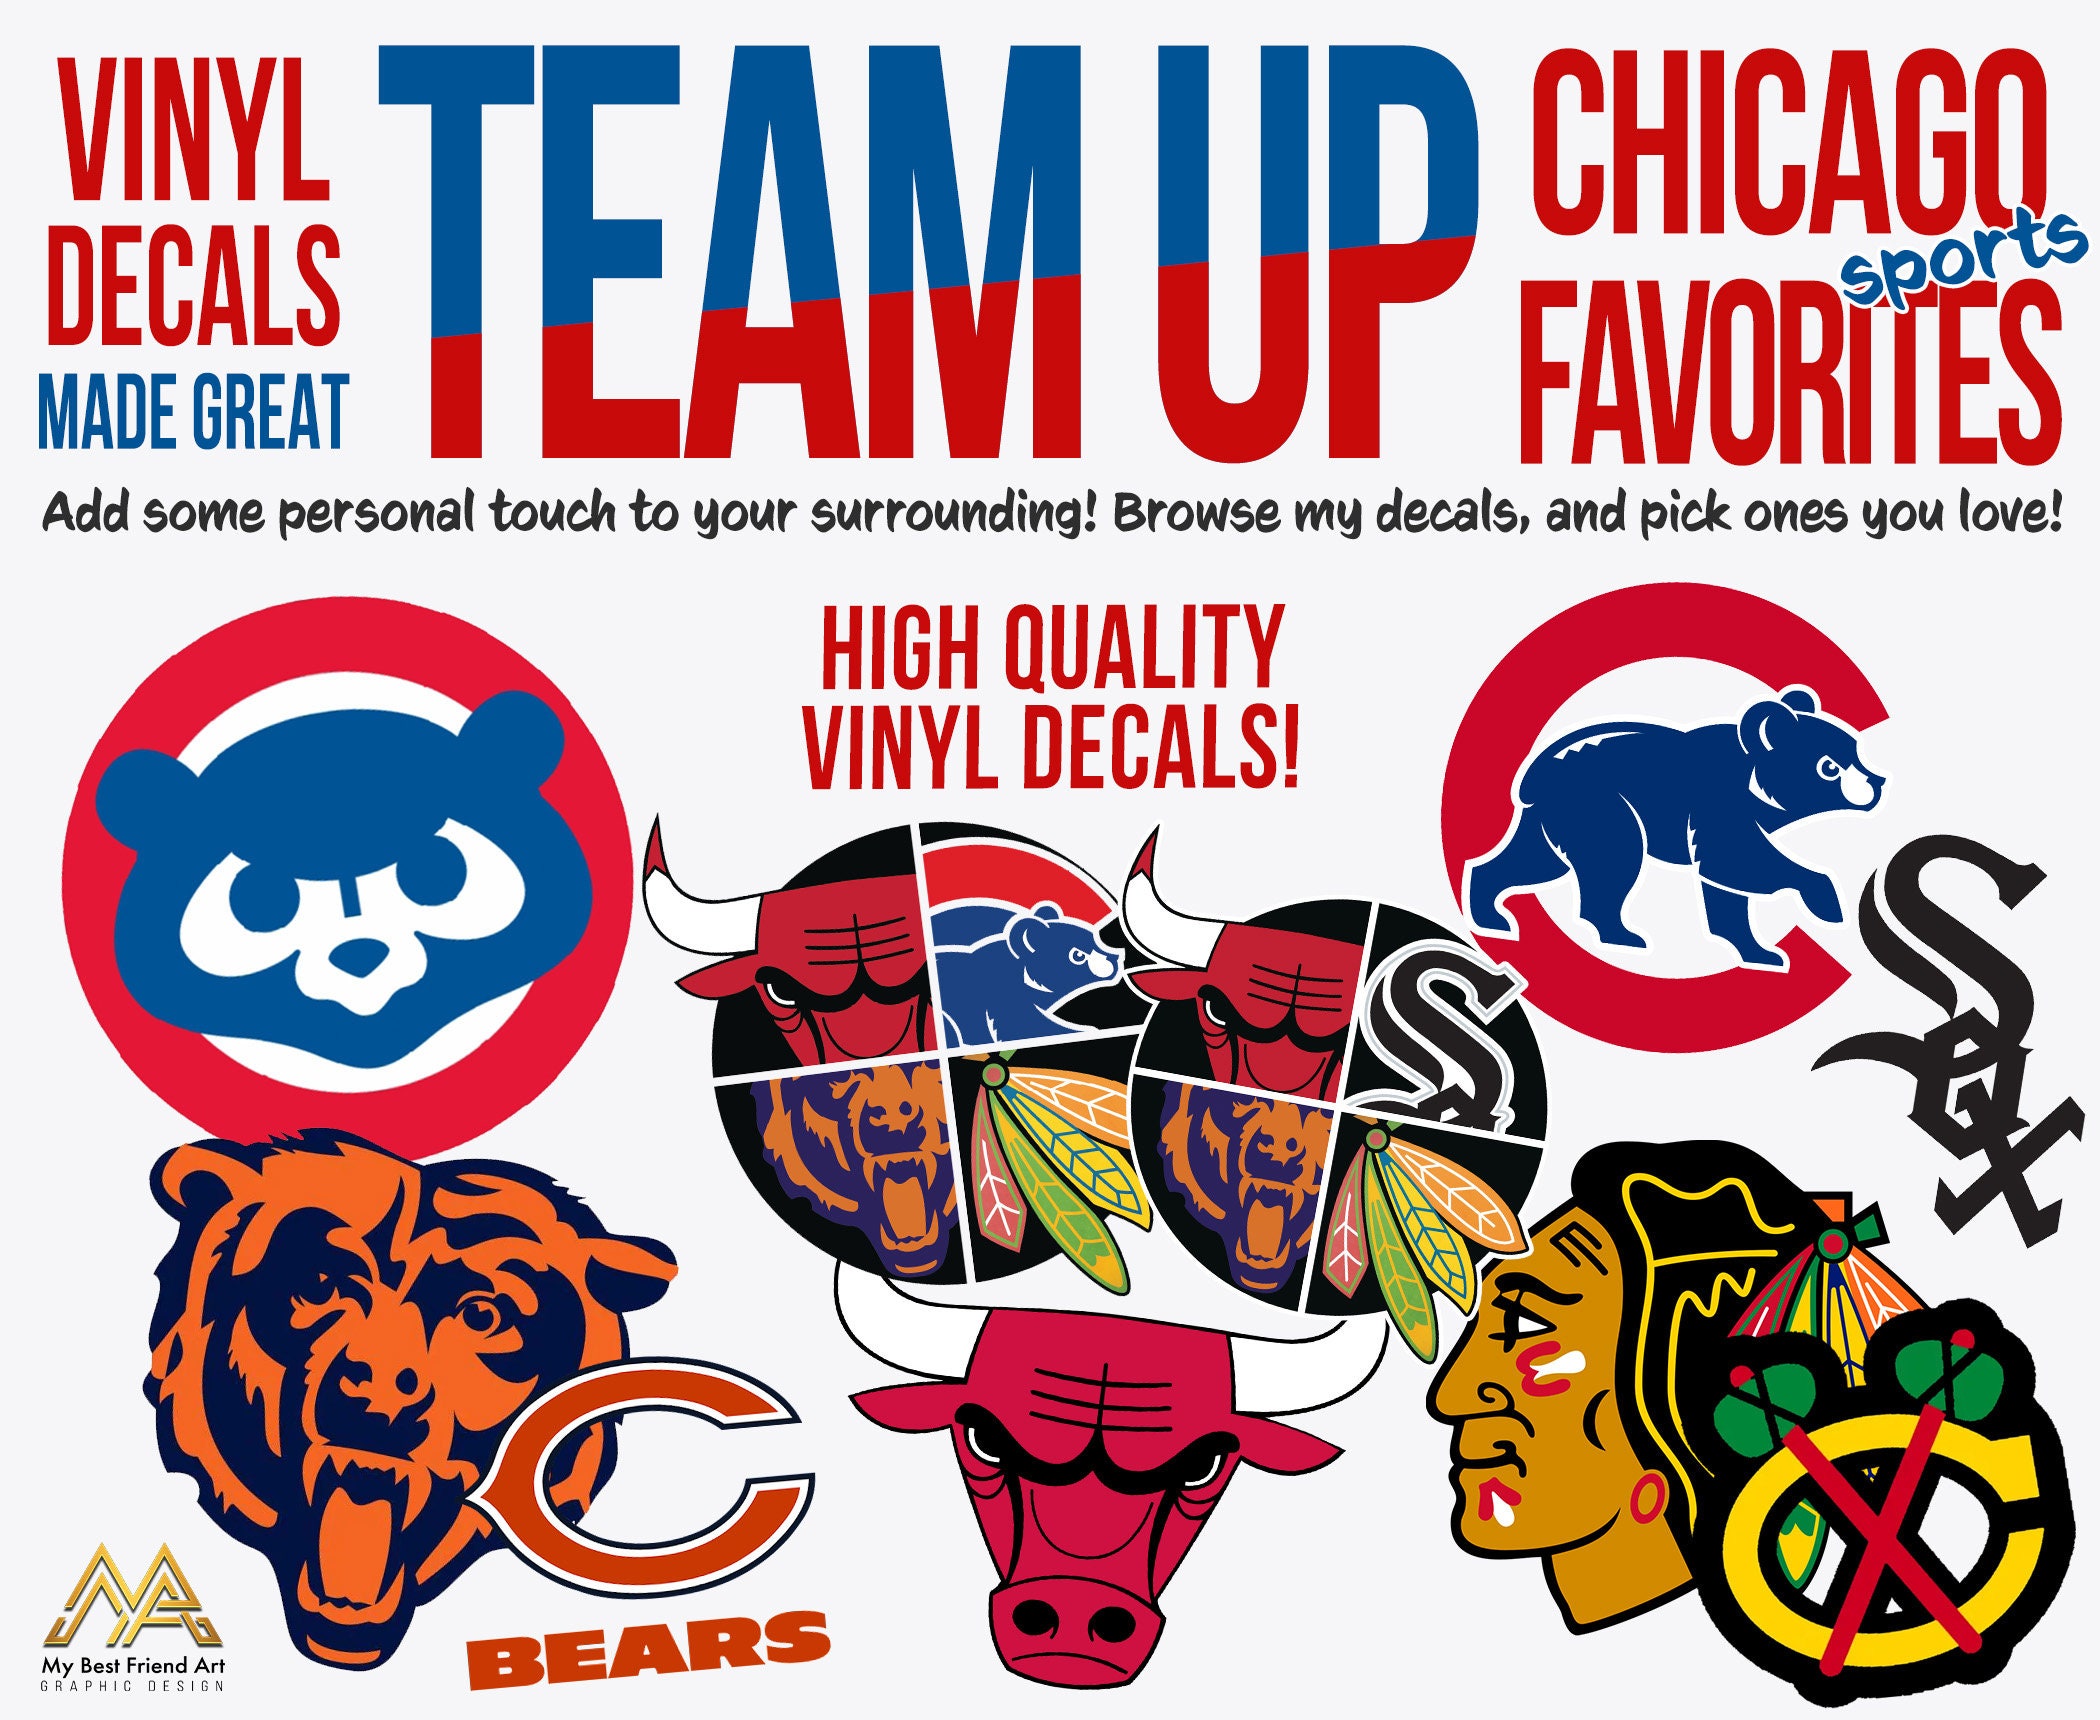 Chicago Cubs Bears Bulls Blackhawks Logos blended Together Men's t  shirt sz XL